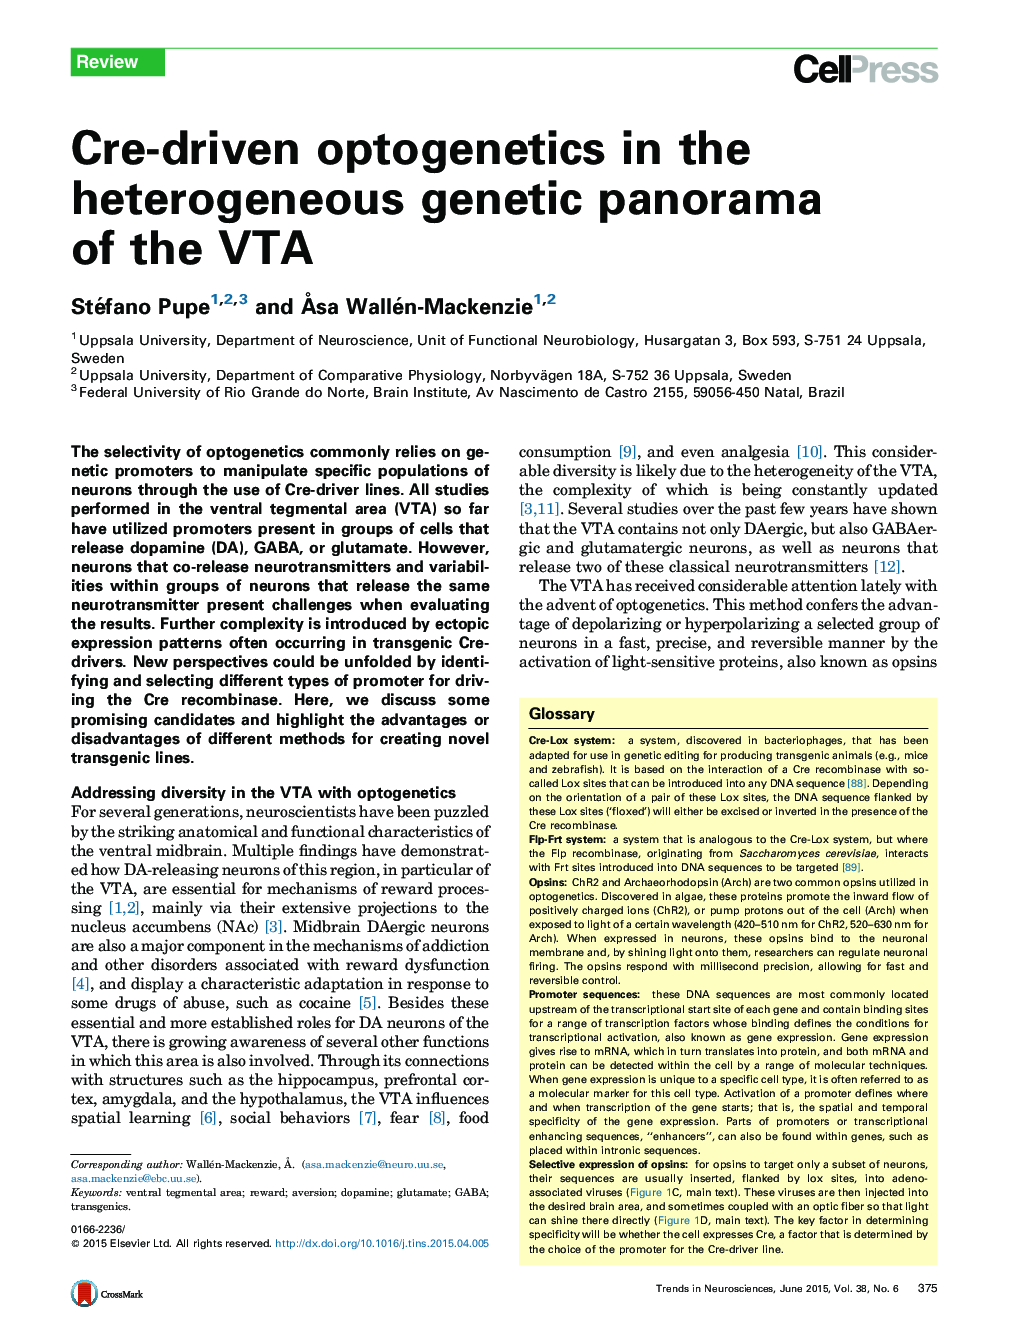 Cre-driven optogenetics in the heterogeneous genetic panorama of the VTA